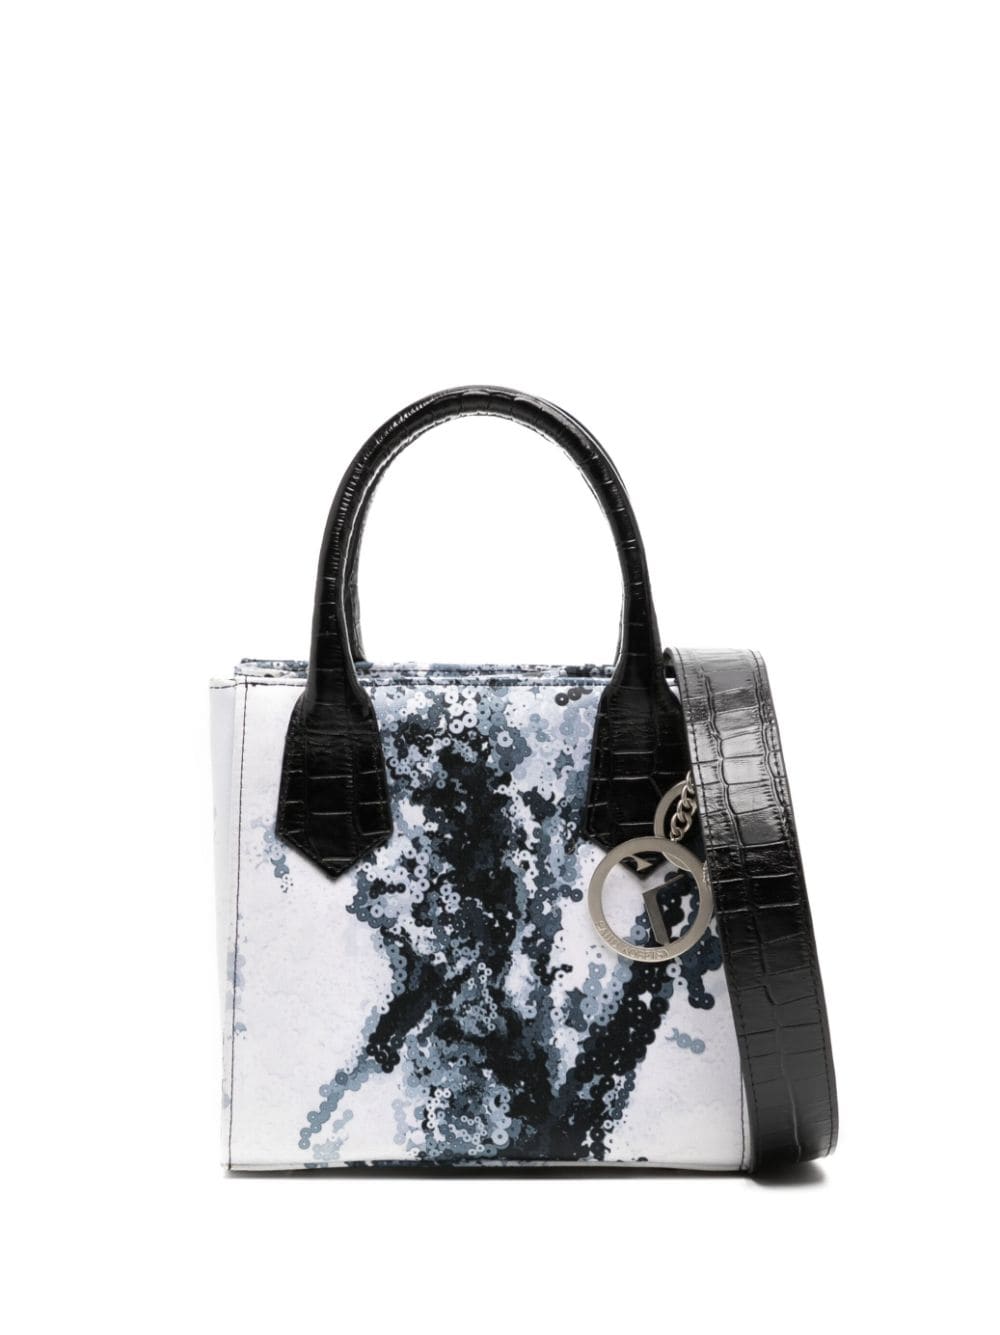 Saiid Kobeisy sequin-embellished mini bag - White von Saiid Kobeisy